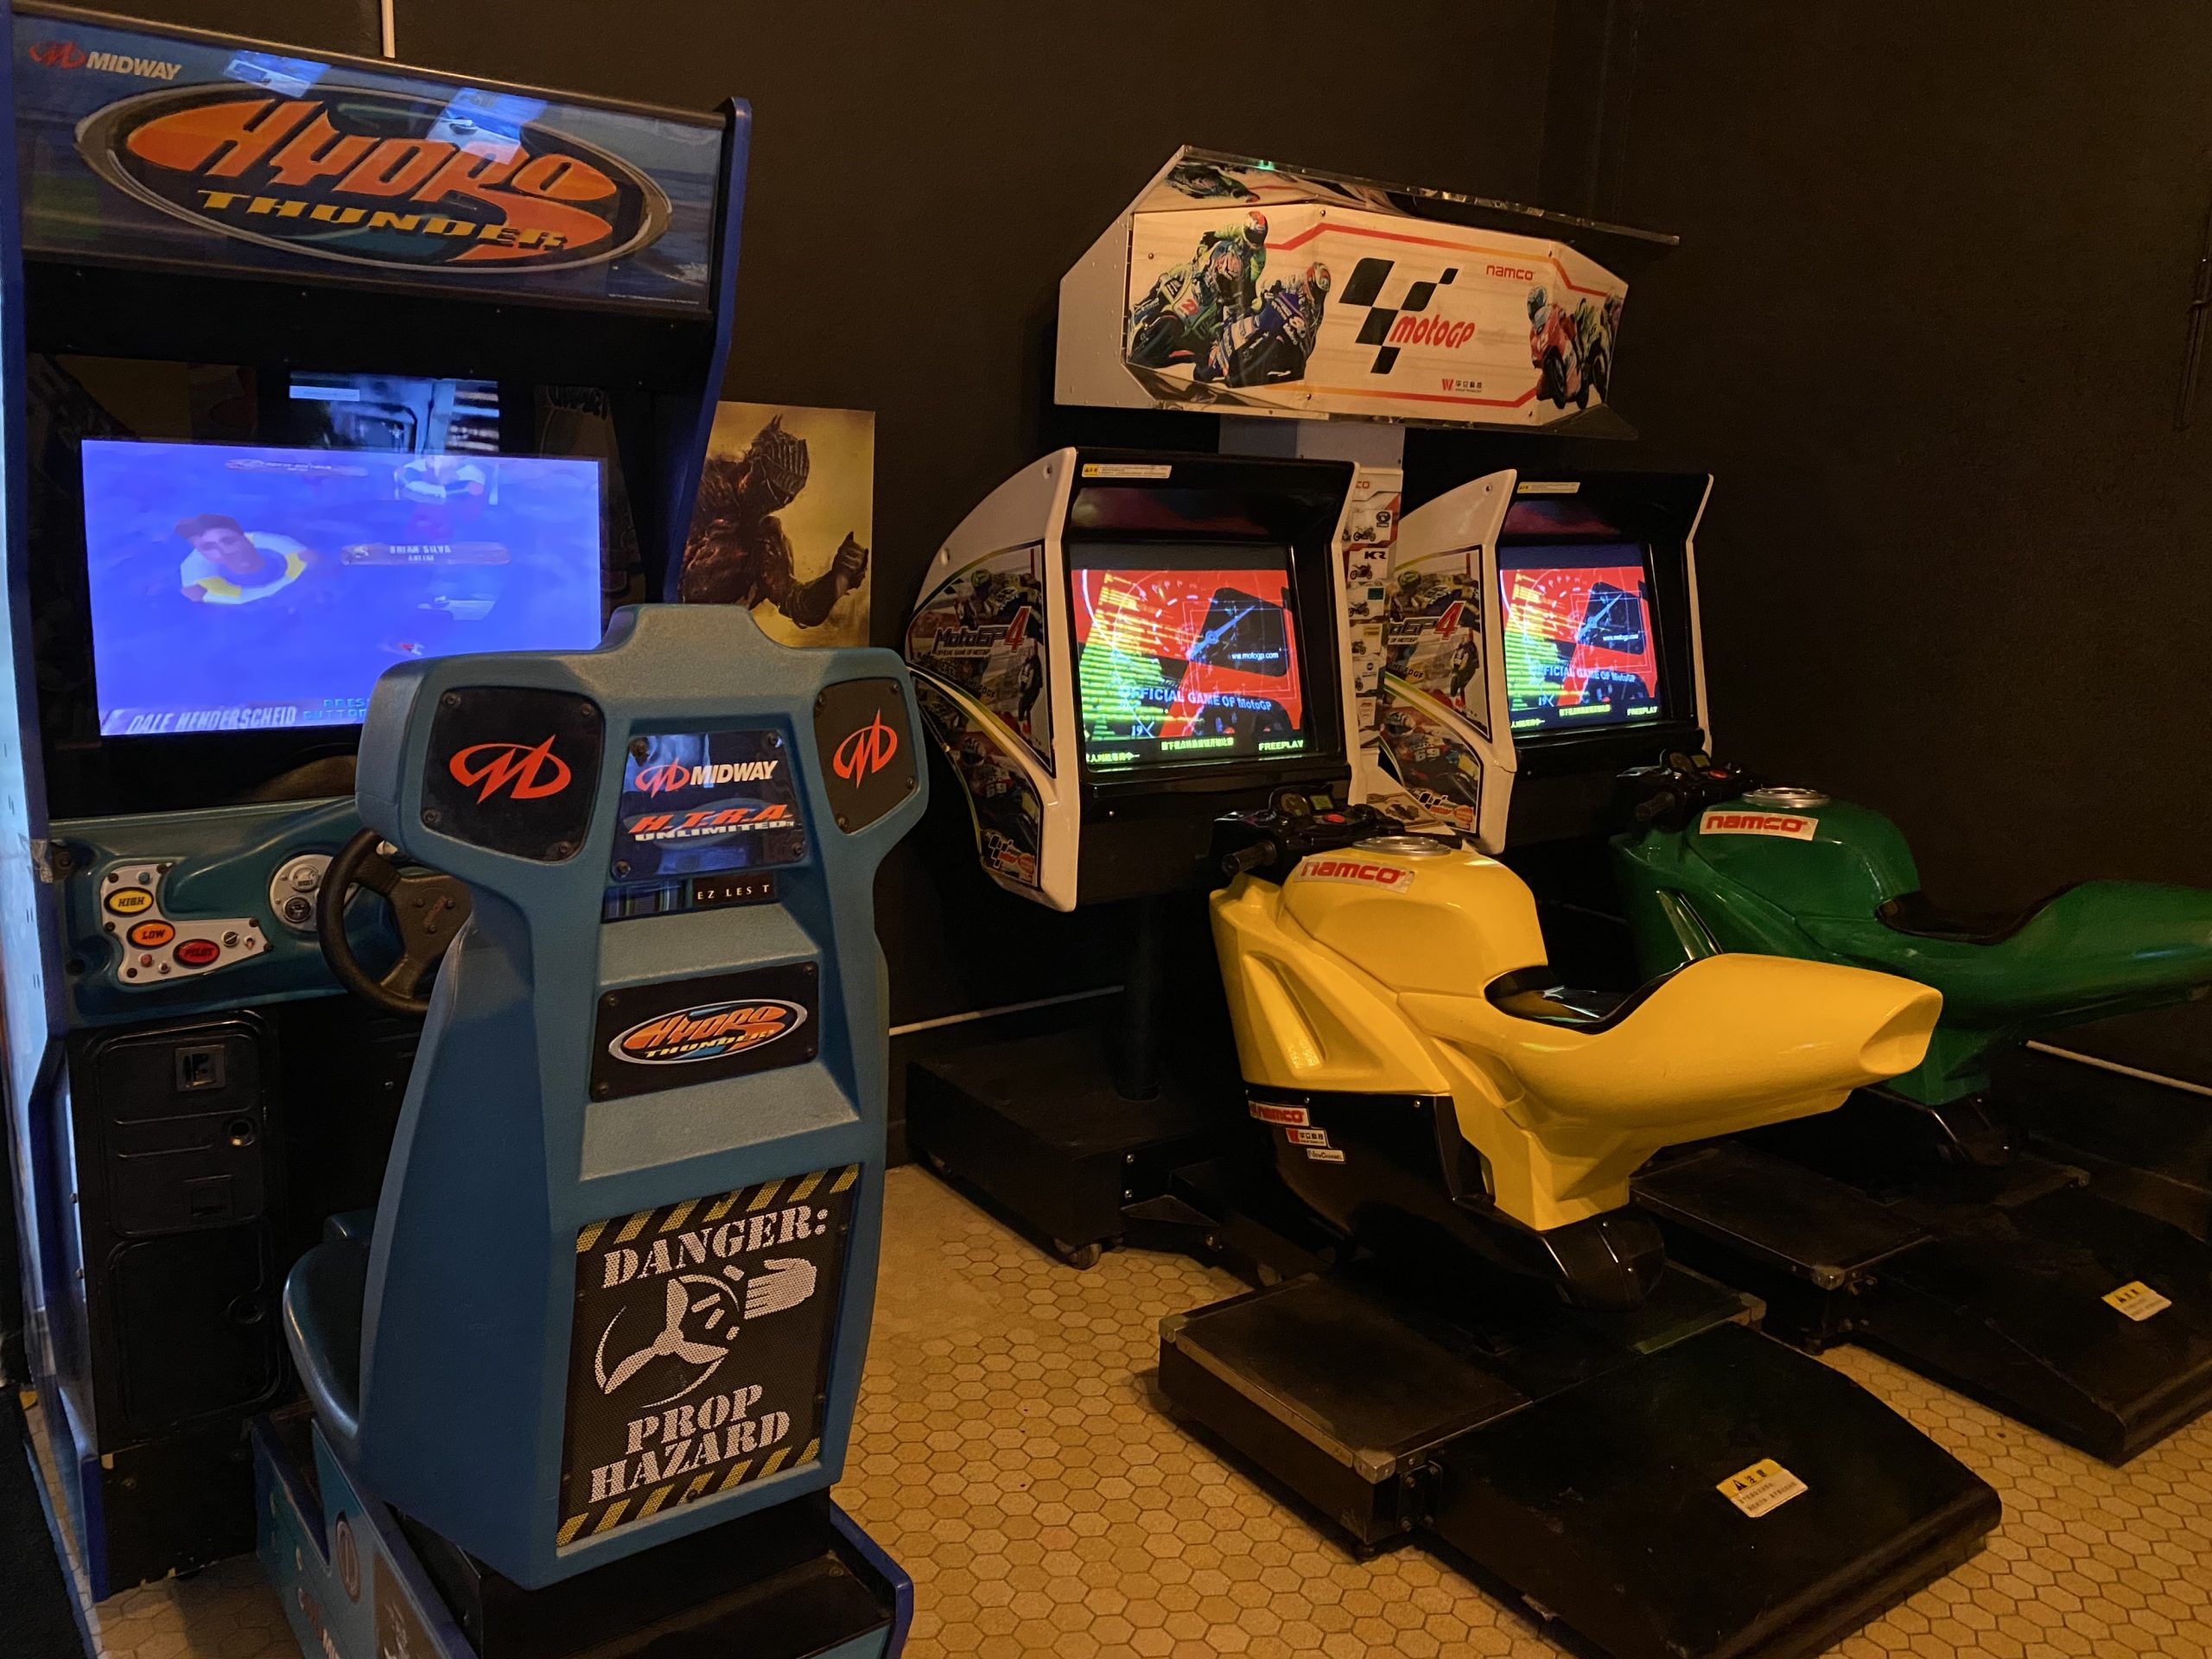 Jogos para arcade: Pump It Up, Pong, Street Fighter II, Guilty Gear XX,  Killer Instinct, Tatsunoko vs. Capcom: Cross Generation of Heroes